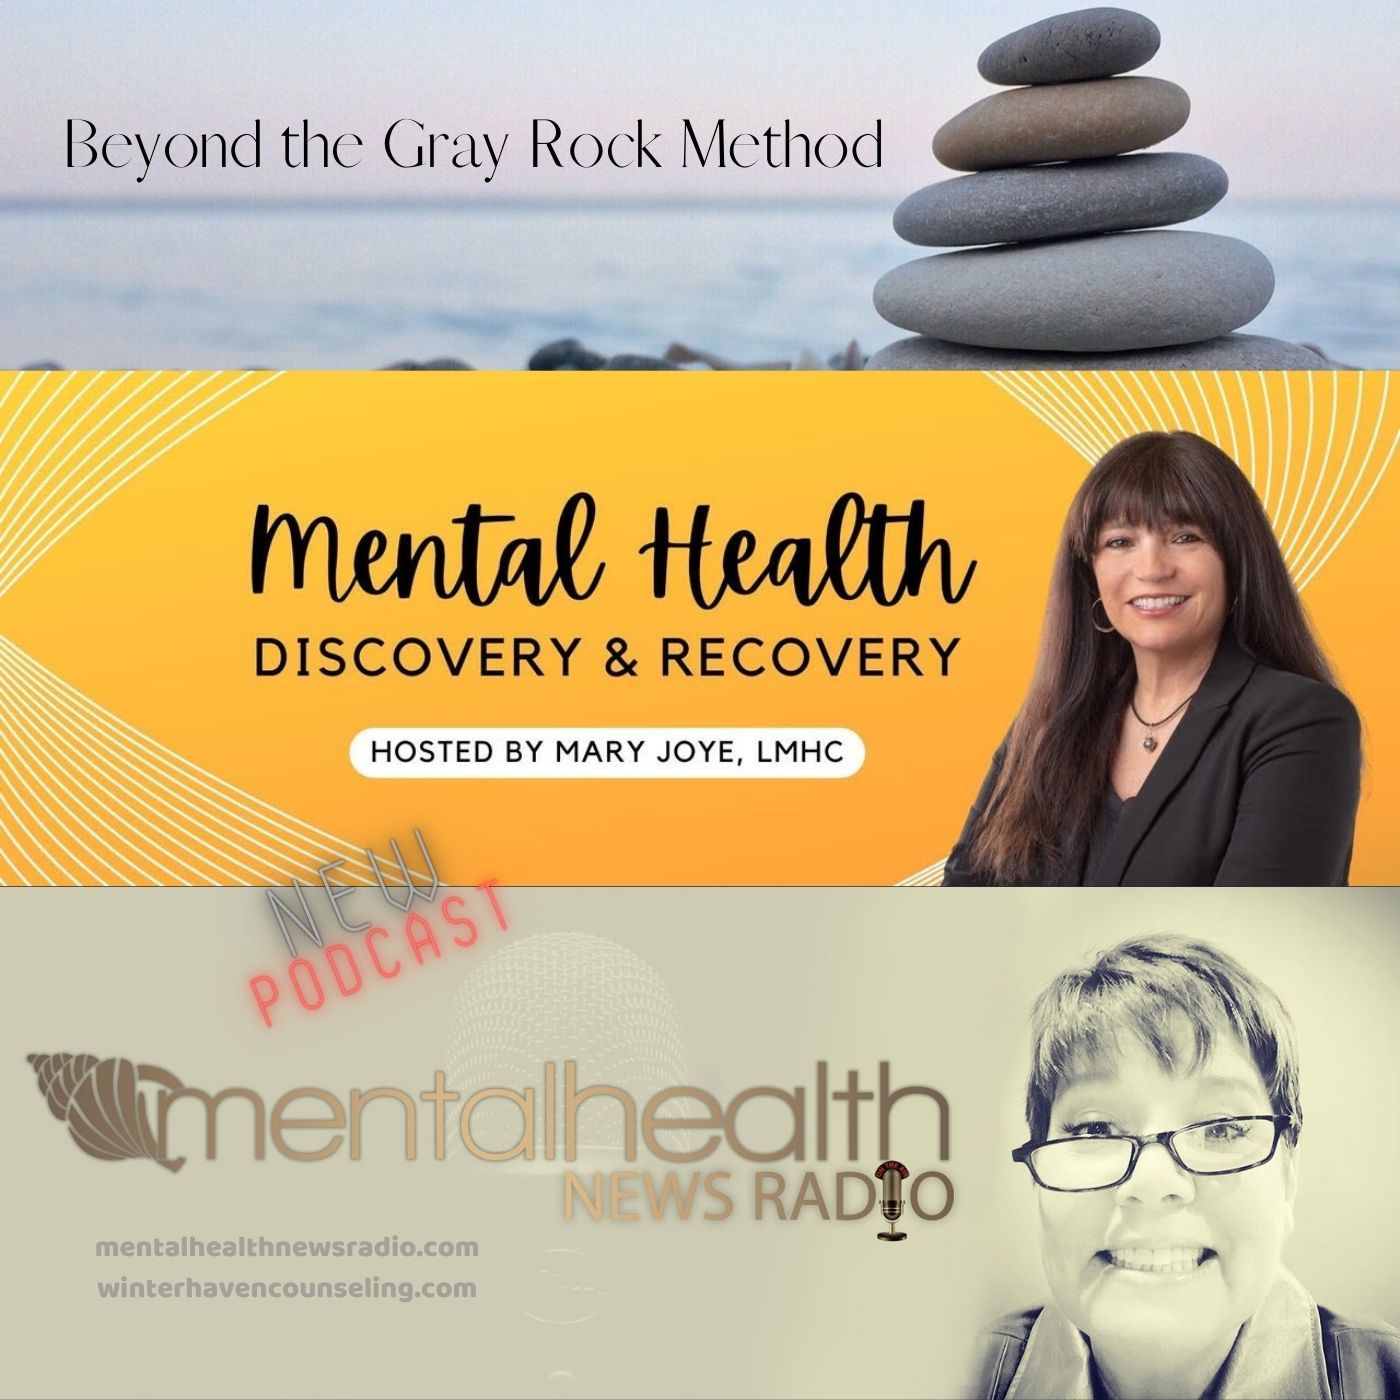 Mental Health News Radio - Beyond the Gray Rock Method with Mary Joye